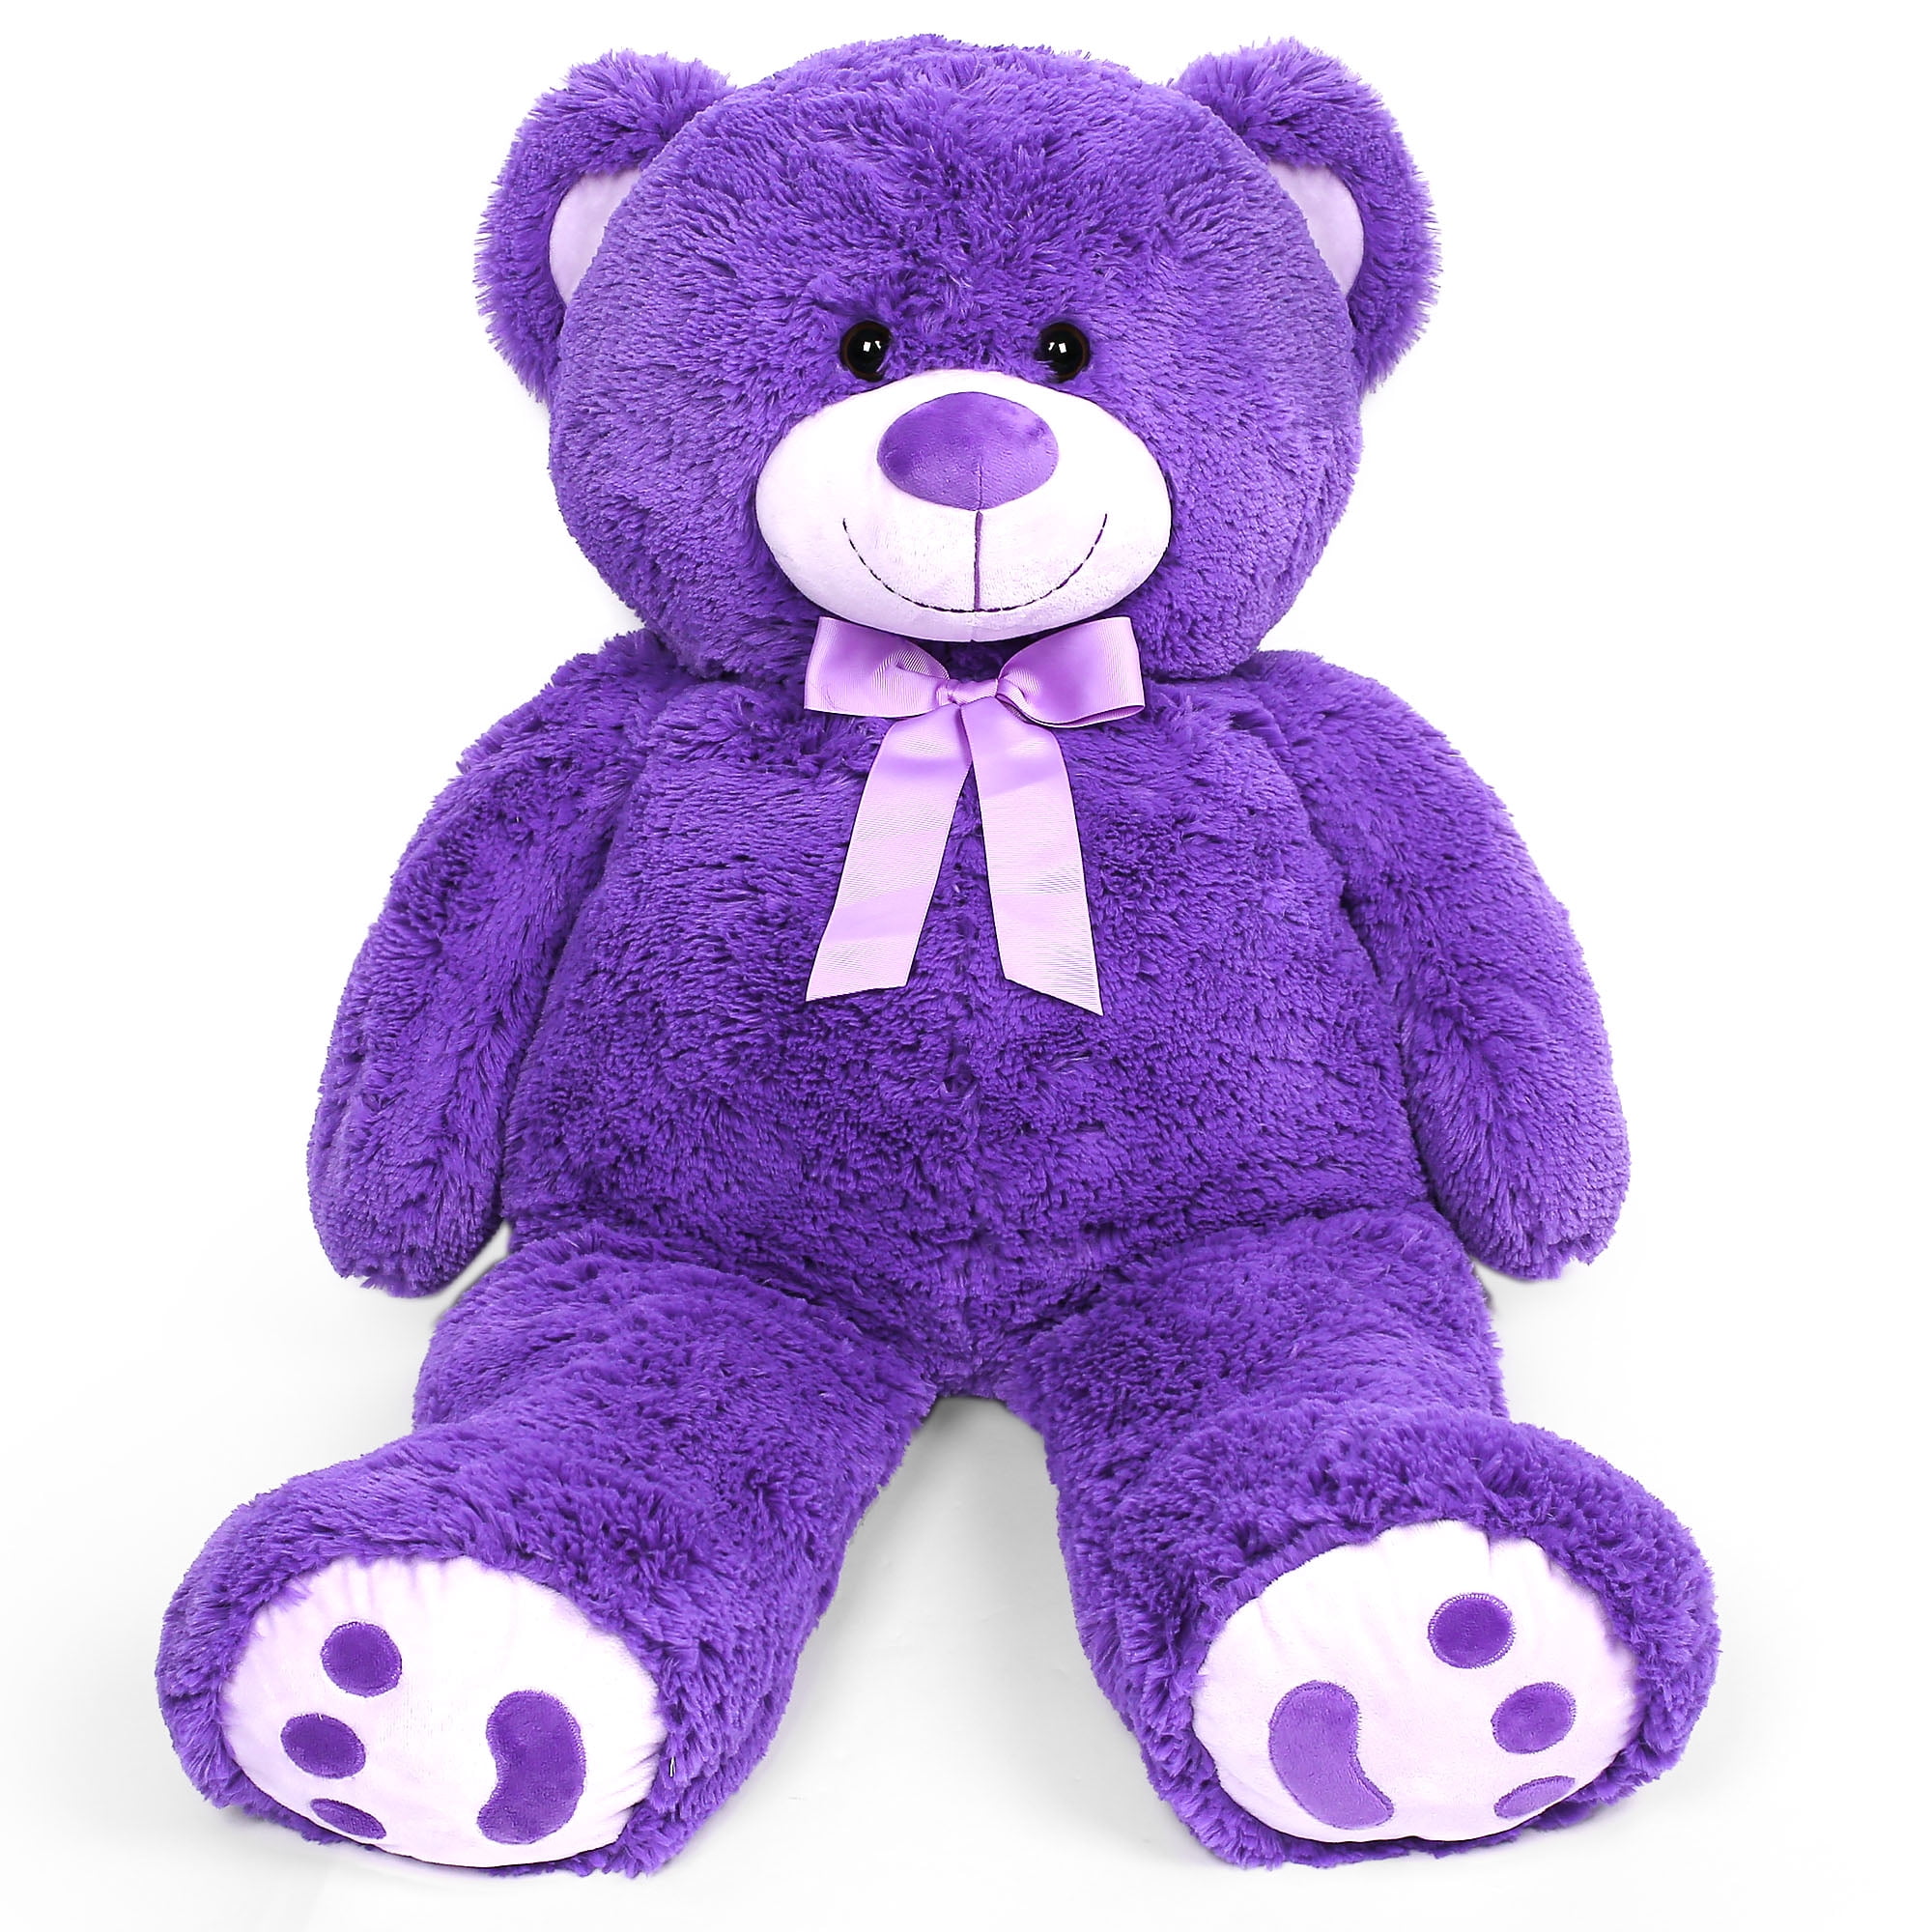 LotFancy 39" Giant Teddy Bear Stuffed Animal, Bear Plush Toy with Footprints for Kids Adult, Purple - image 1 of 9